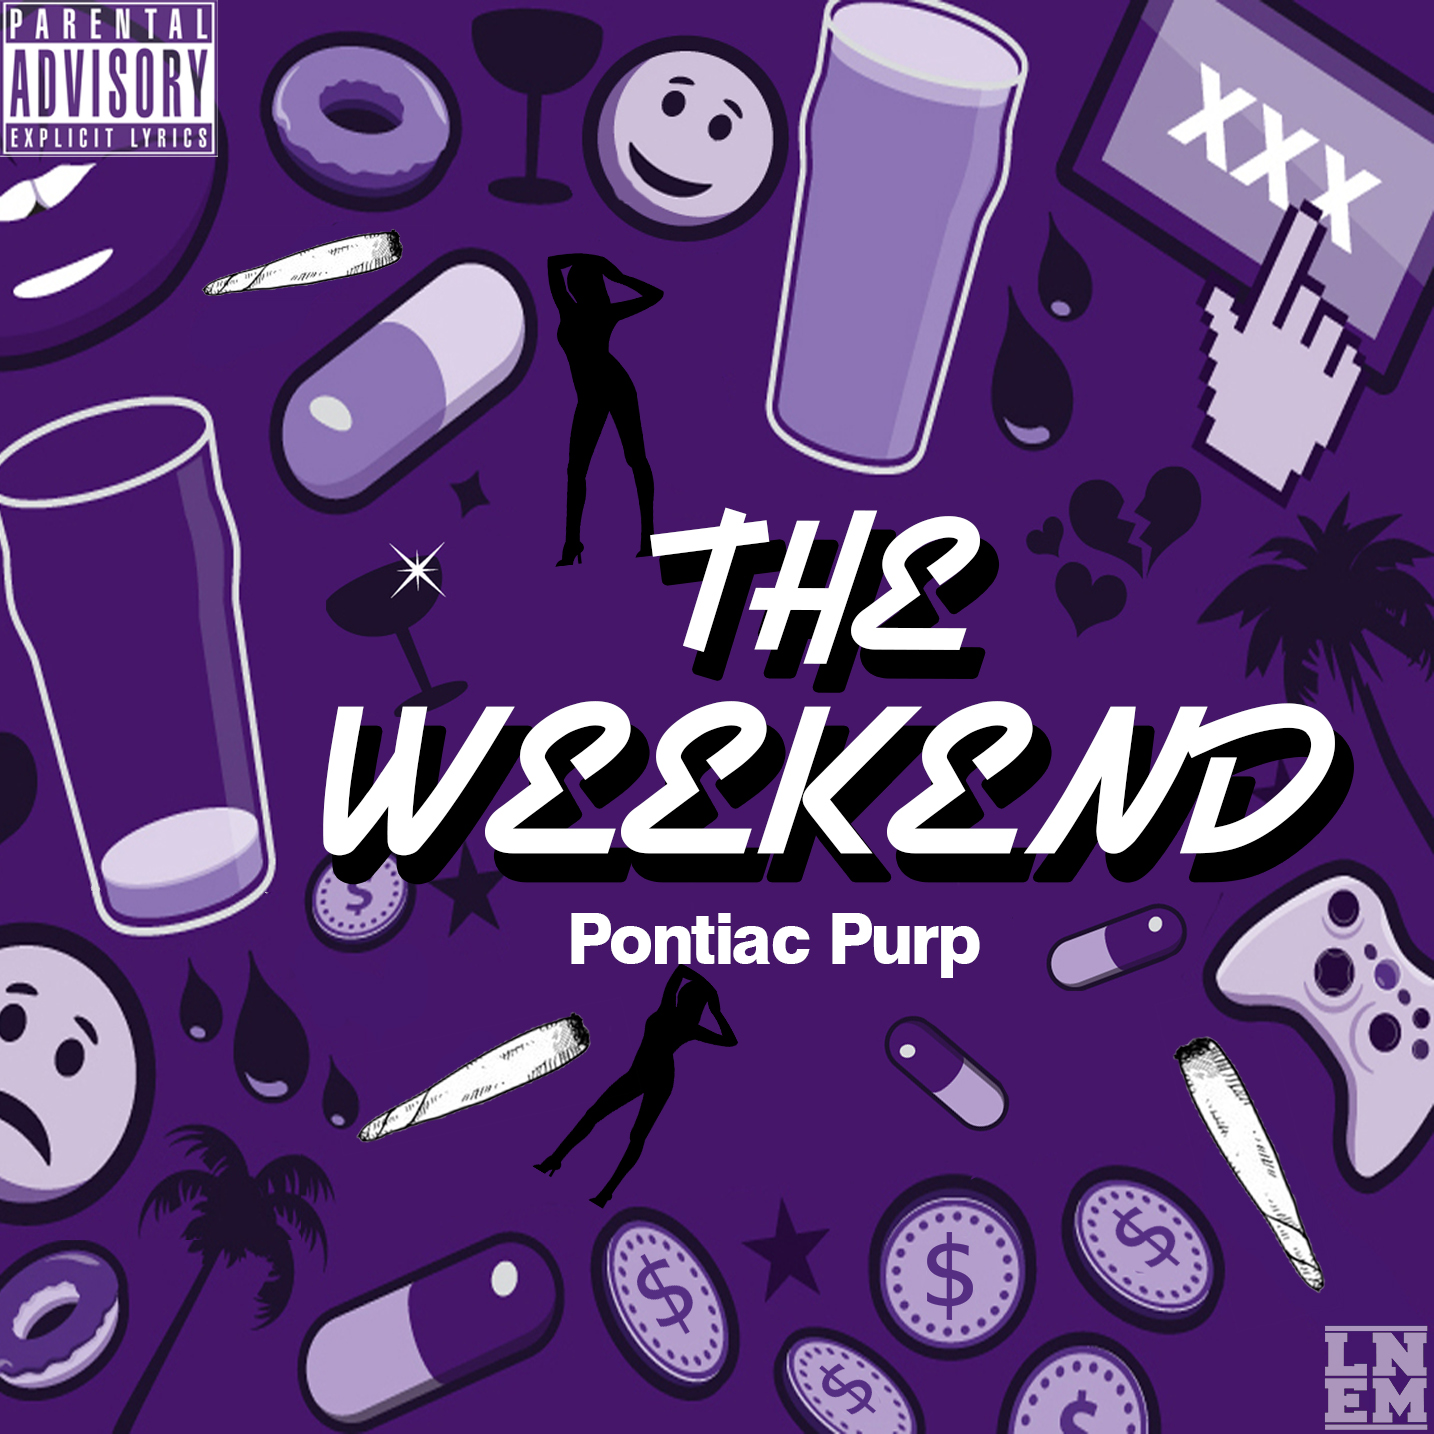 Pontiac Purp Releases The Weekend